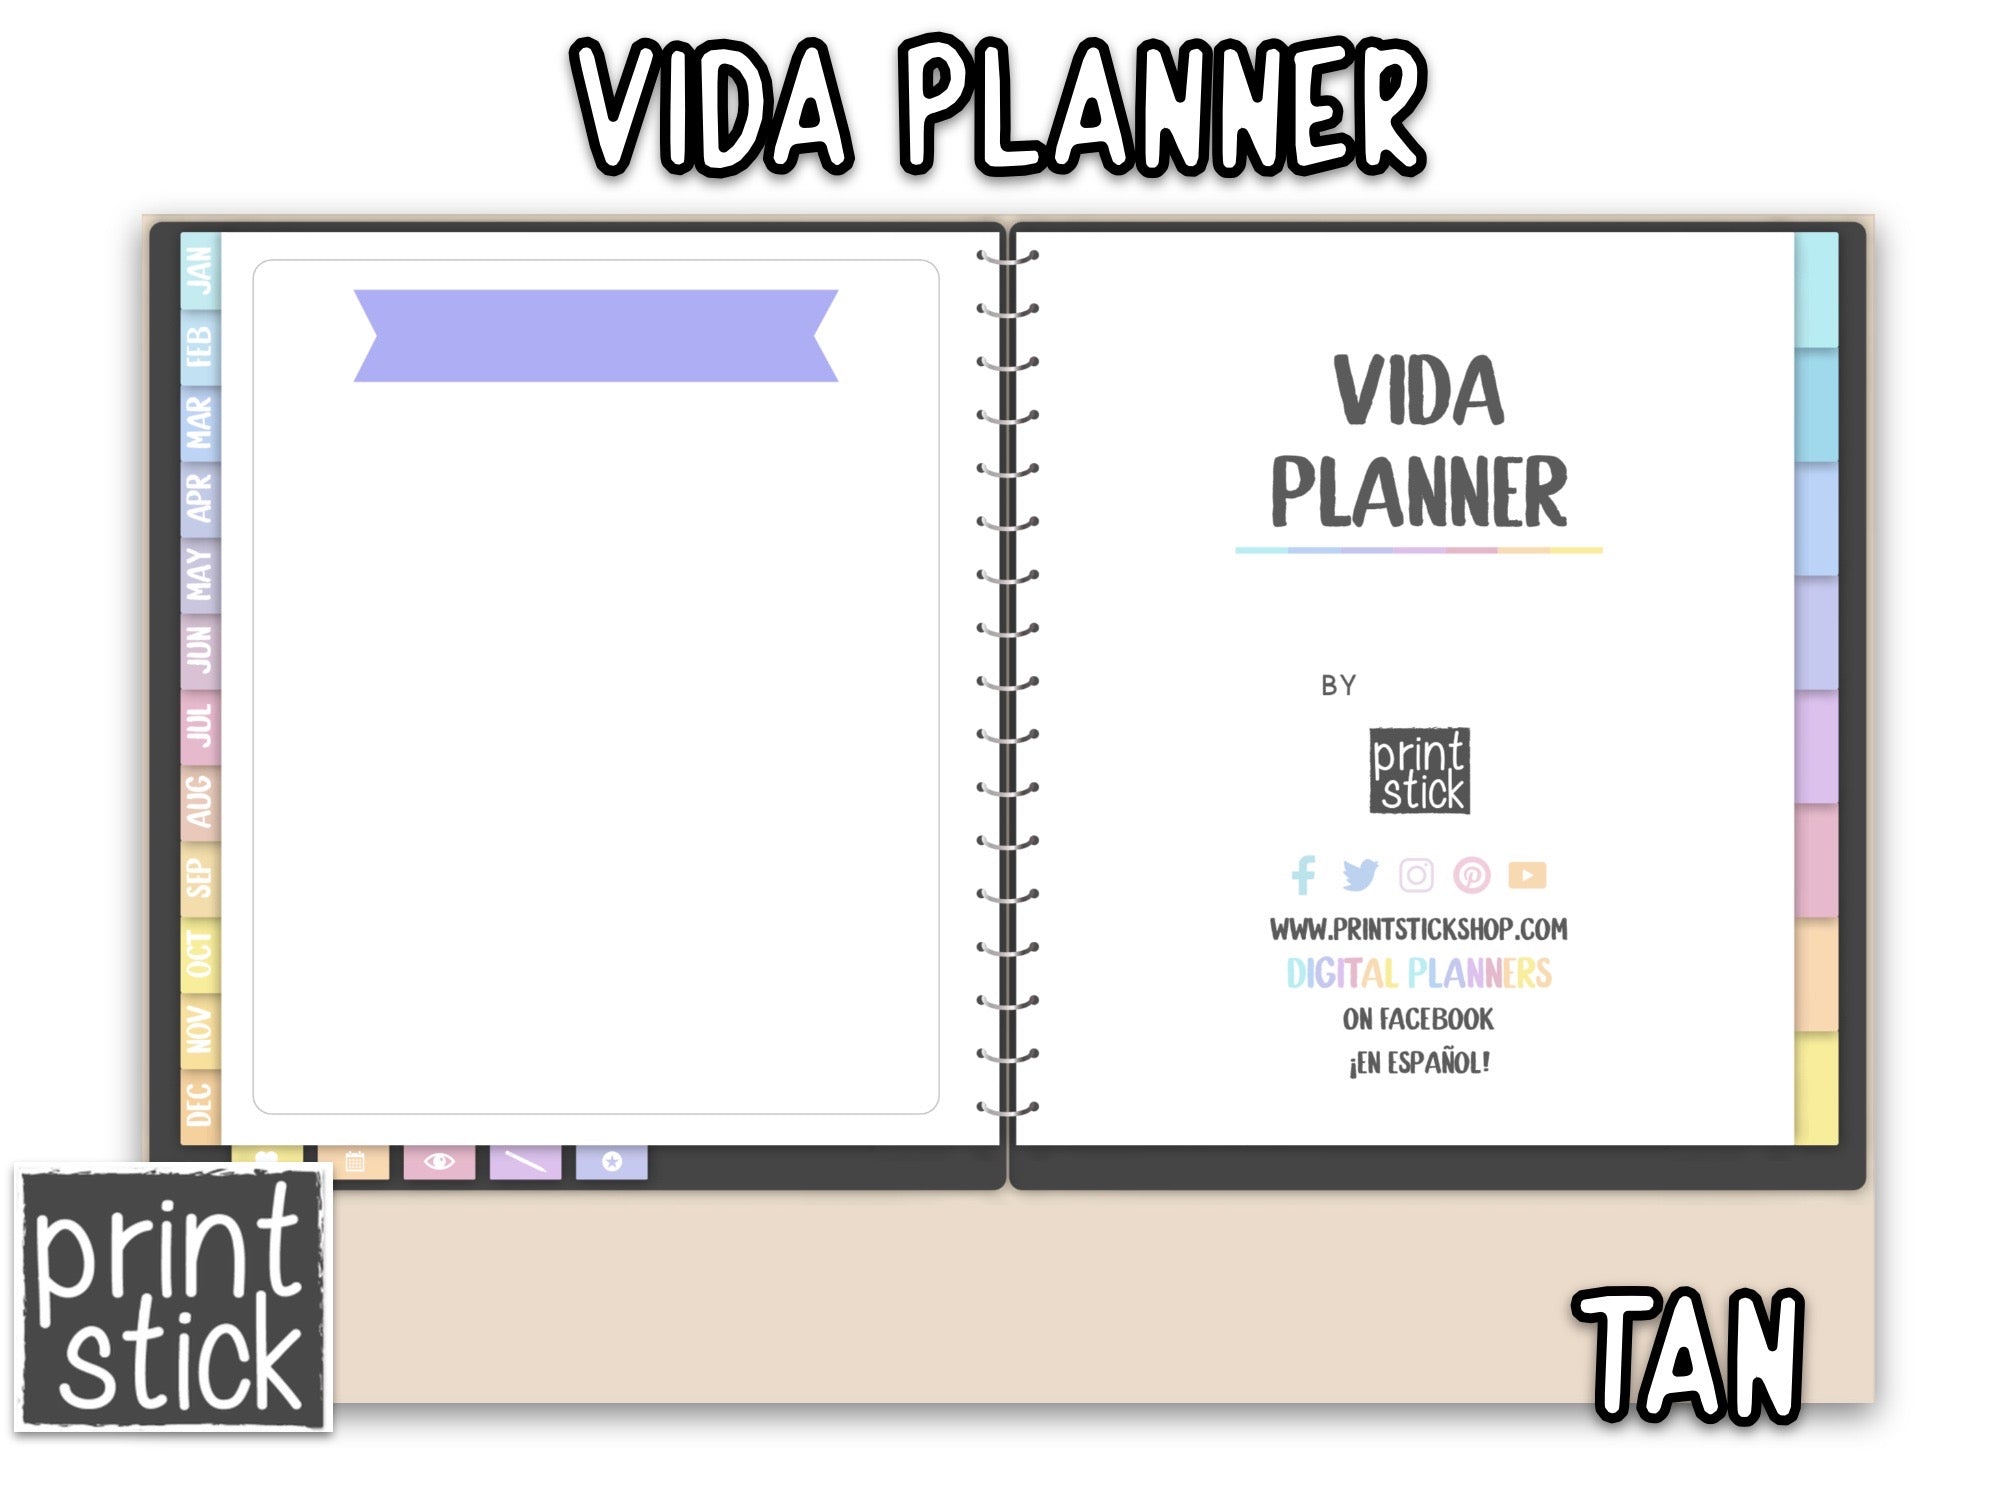 En Español: Agenda Vida Planner - PrintStick